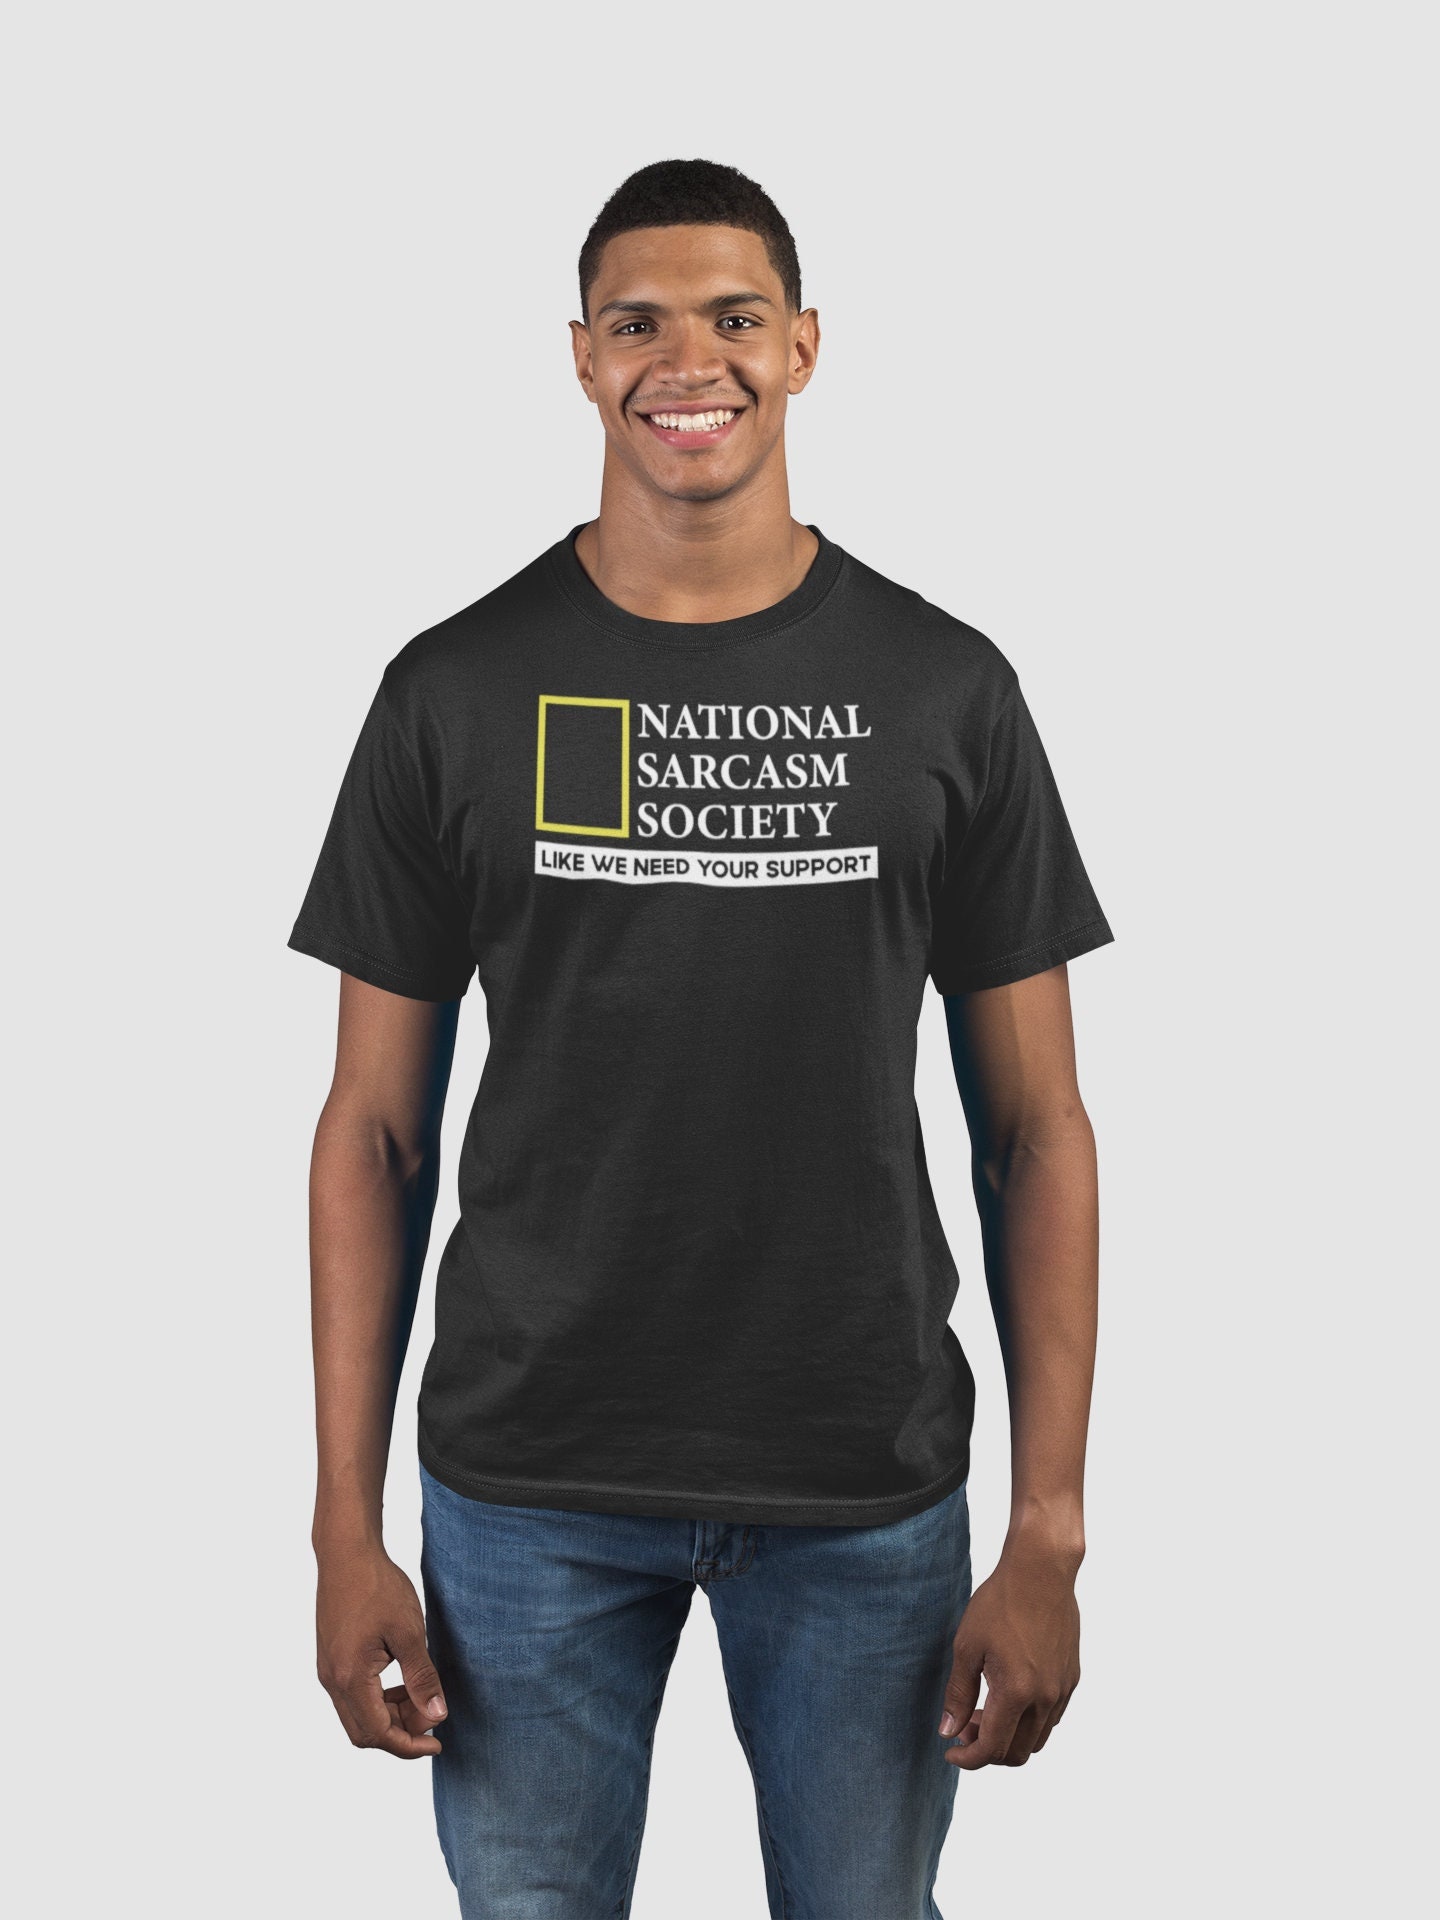 Discover National Sarcasm Society T-Shirt